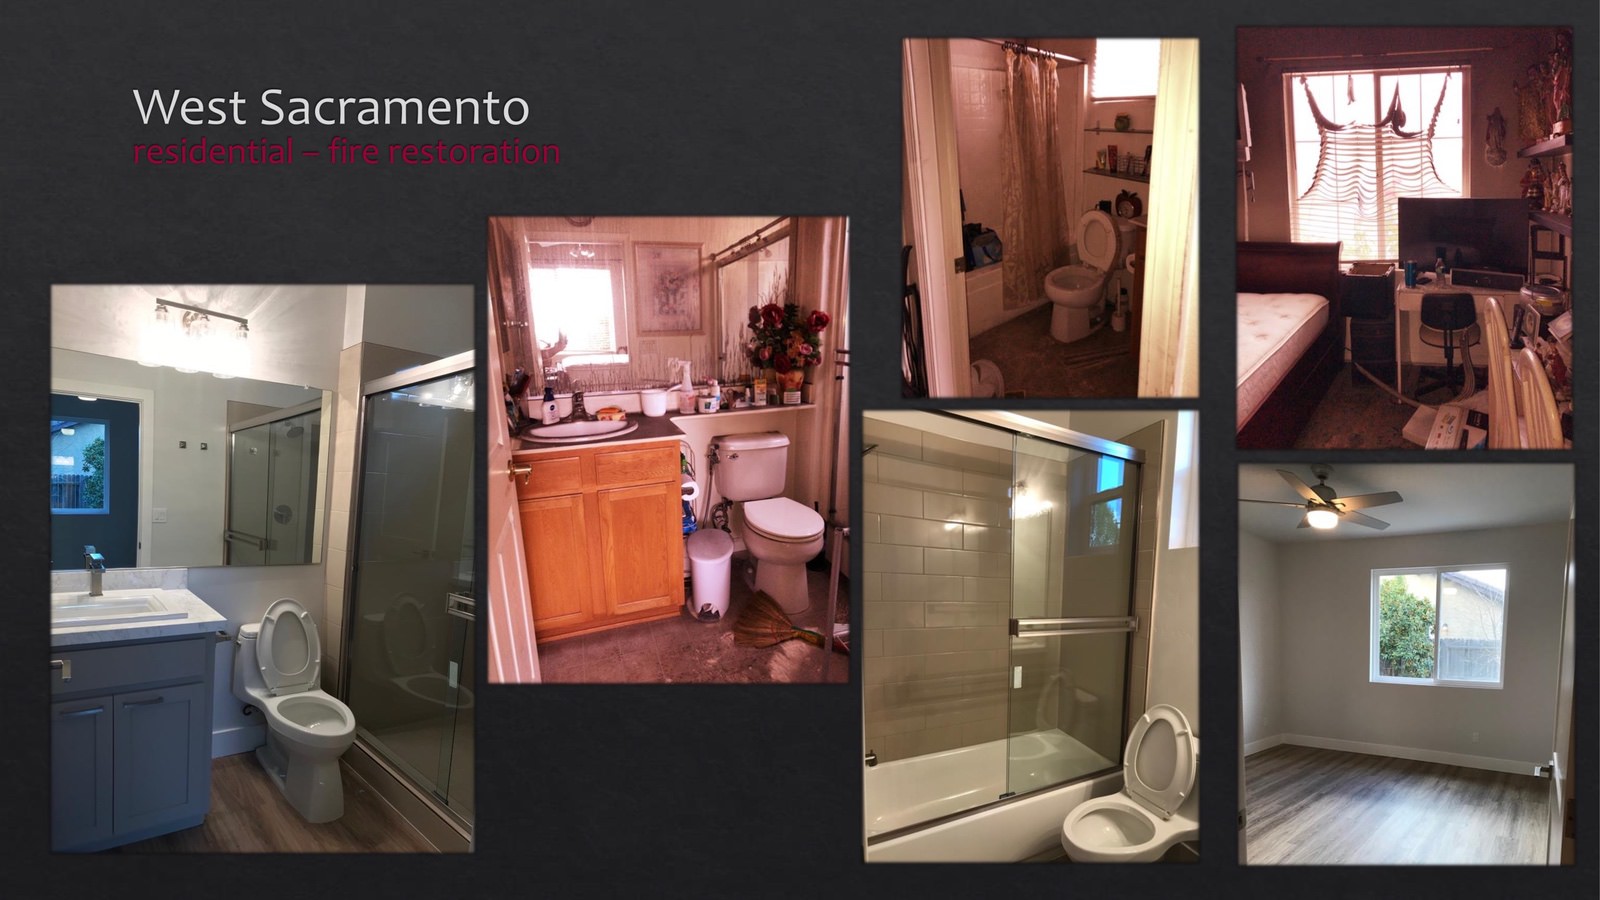 West Sacramento Residential fire restoration - bathroom - lightbox